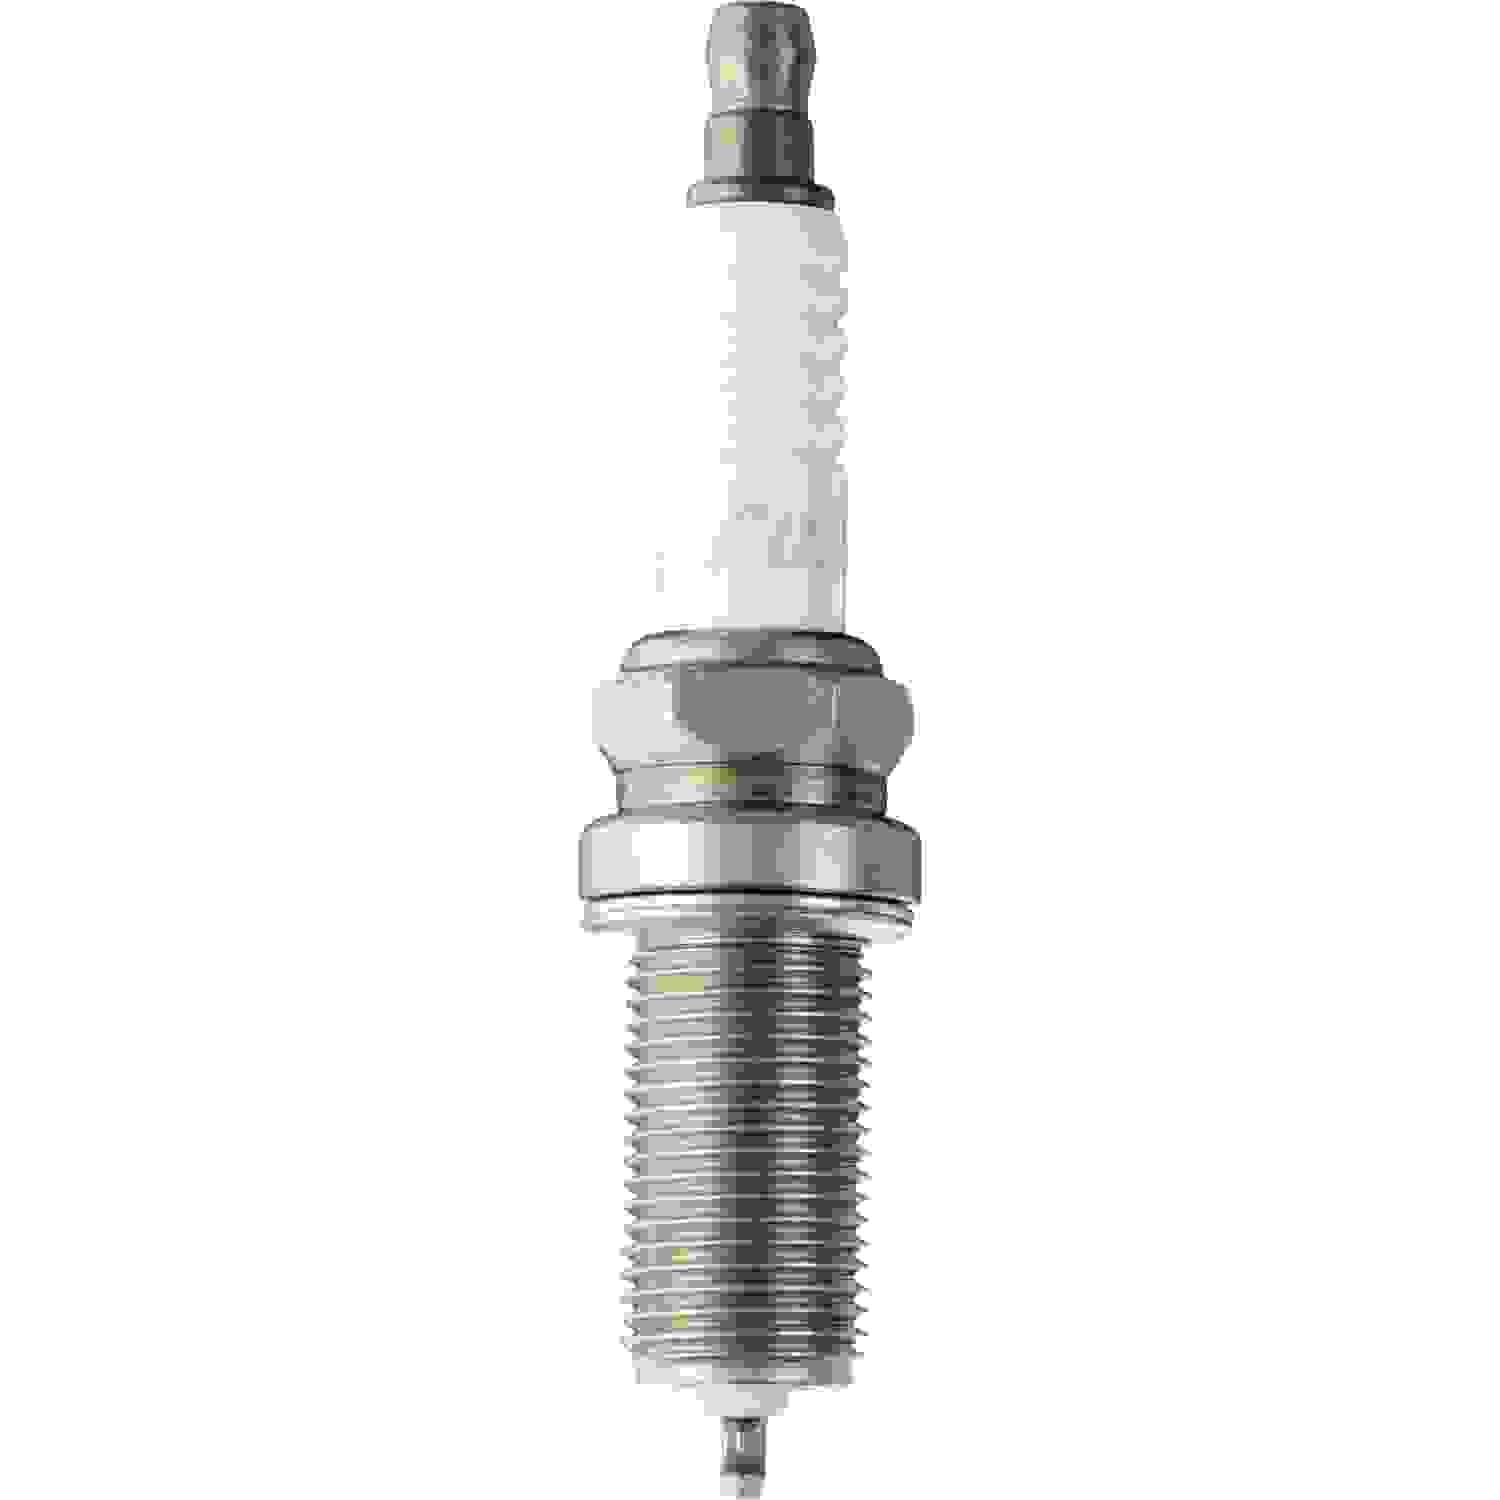 6 pcs NGK Laser Iridium Plug Spark Plugs 2007-2014 for Nissan Frontier 4.0L V6 